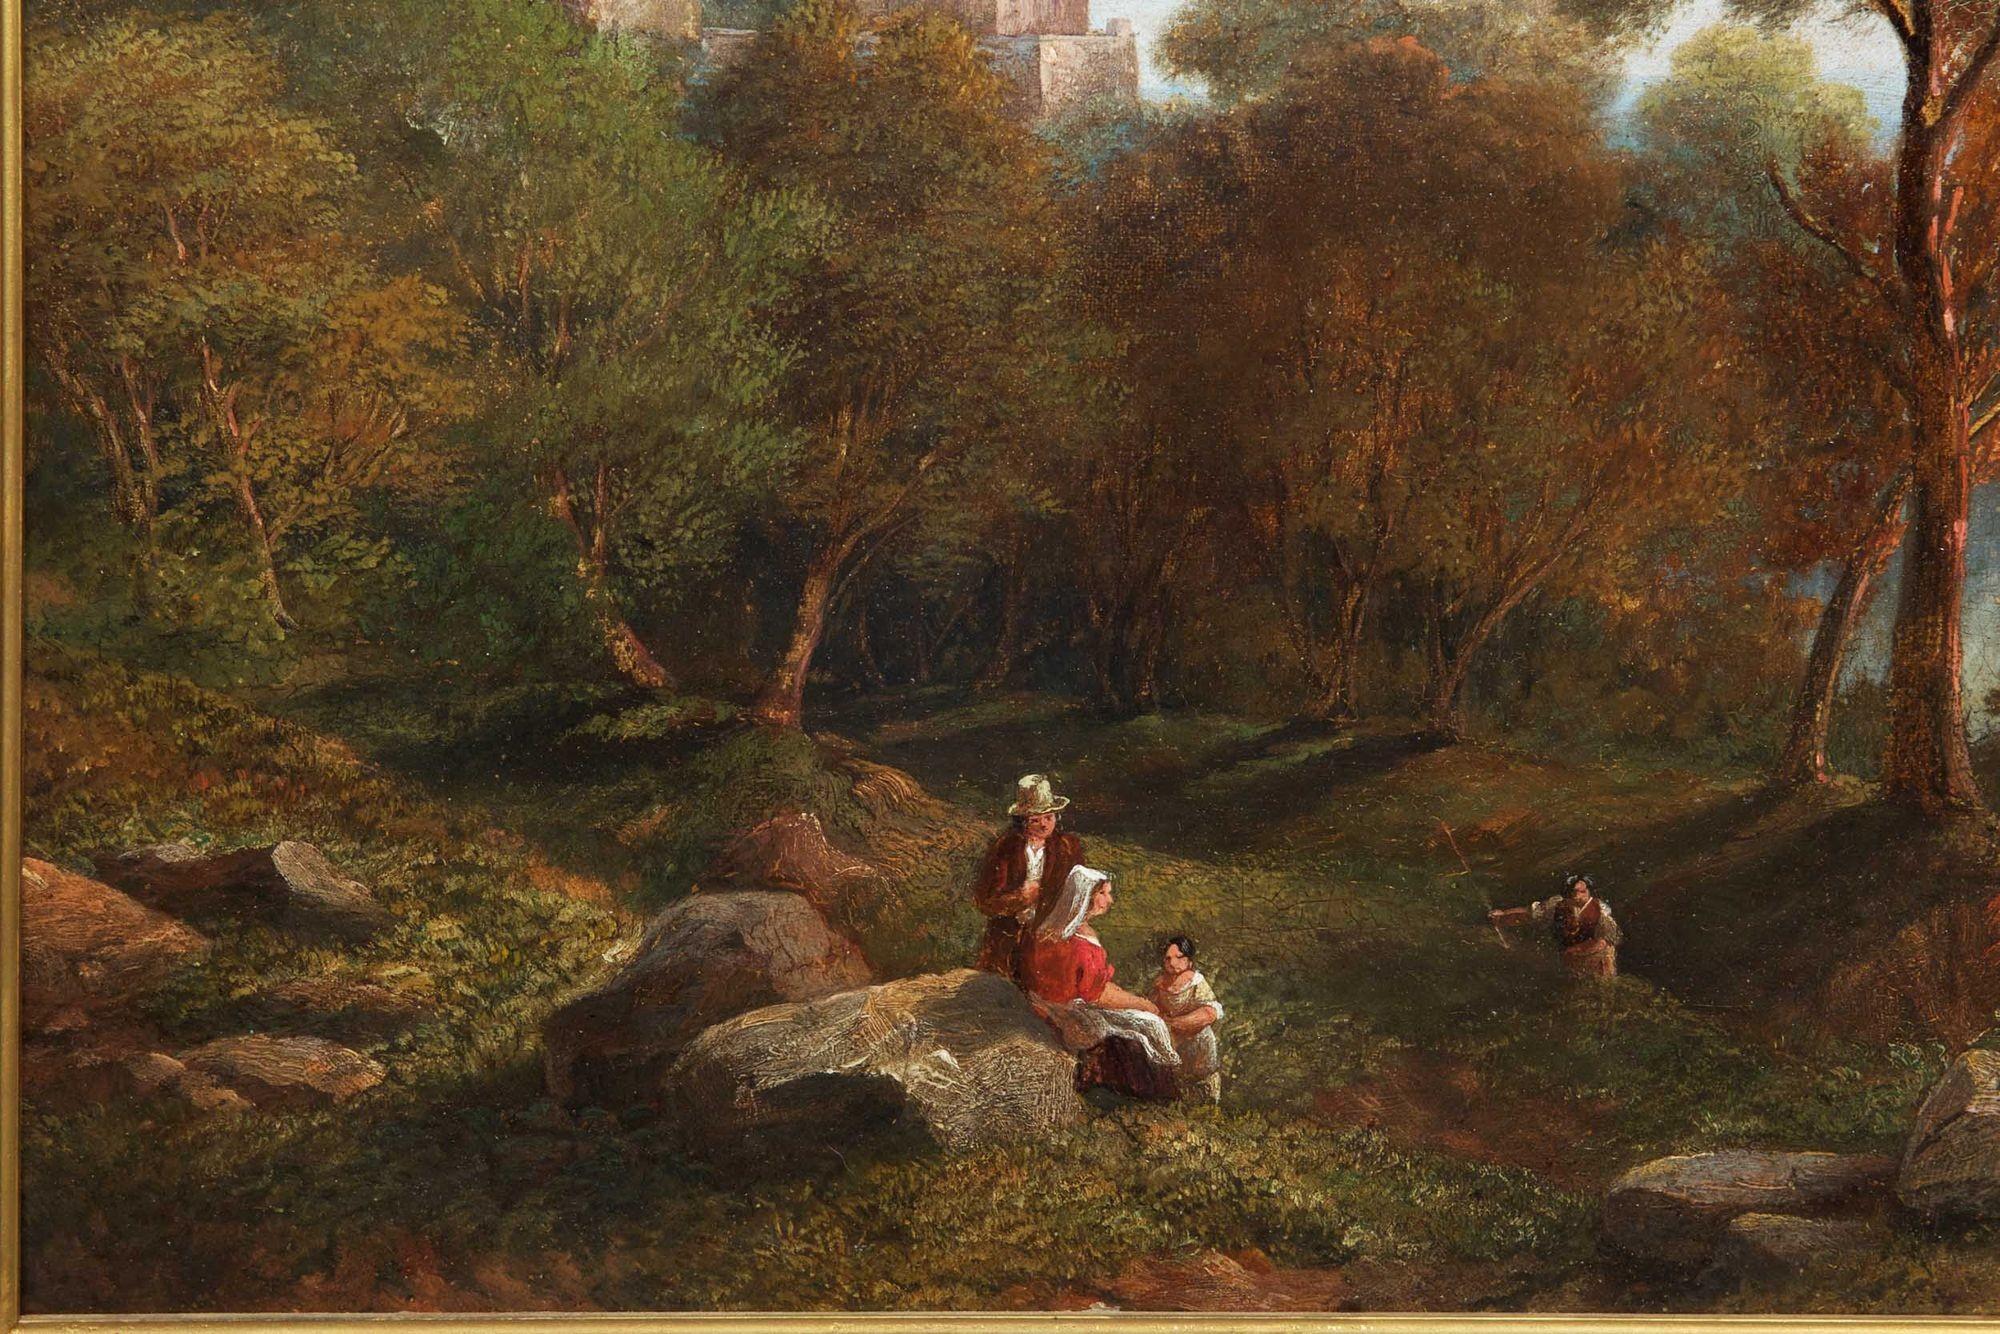 British Antique English Painting “Lake Nemi, Italy” '1865' by John Wilson Carmichael For Sale